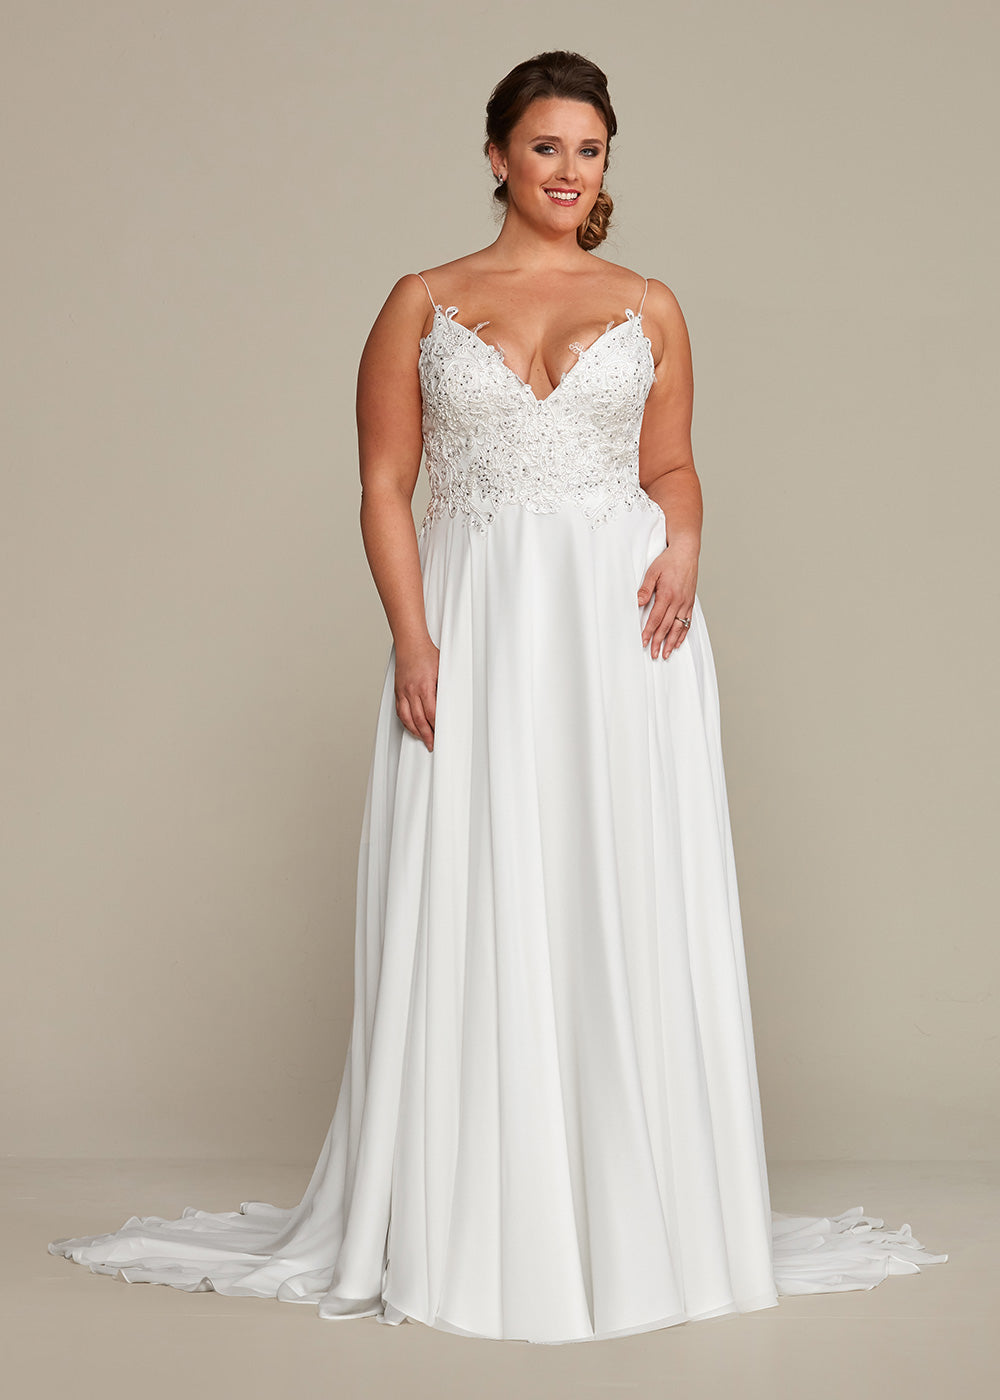 Rachel Wedding Dress – Avery Austin